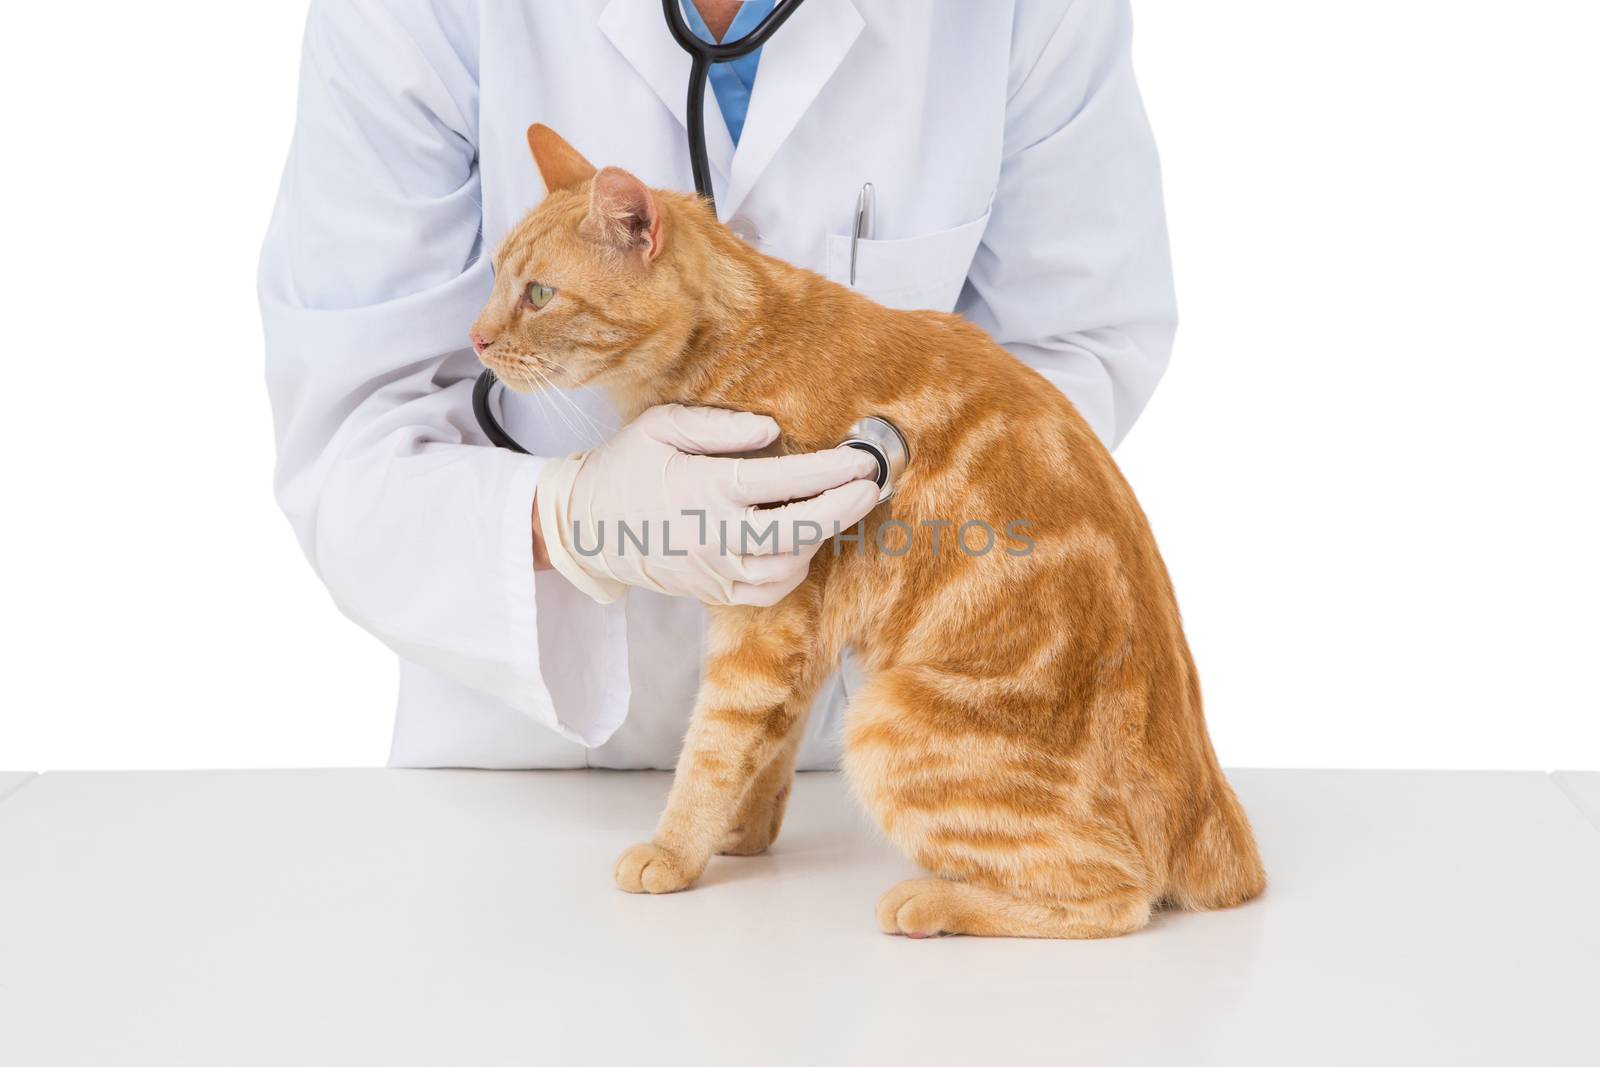 Veterinarian examining a cat with stethoscope  by Wavebreakmedia